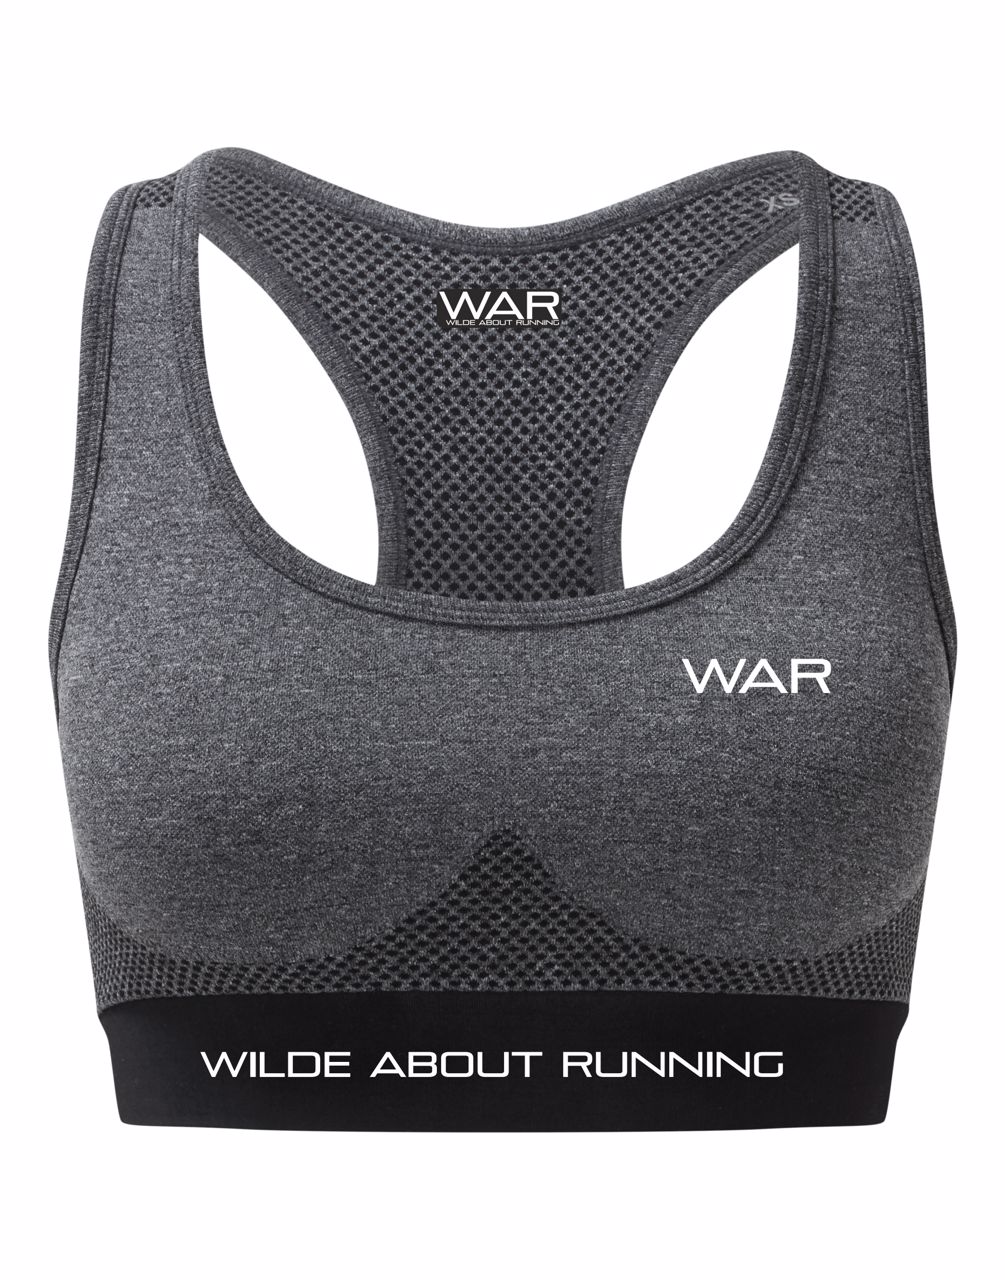 WAR branded ladies seam free workout bra topTR210 War Gazelle Sports UK 